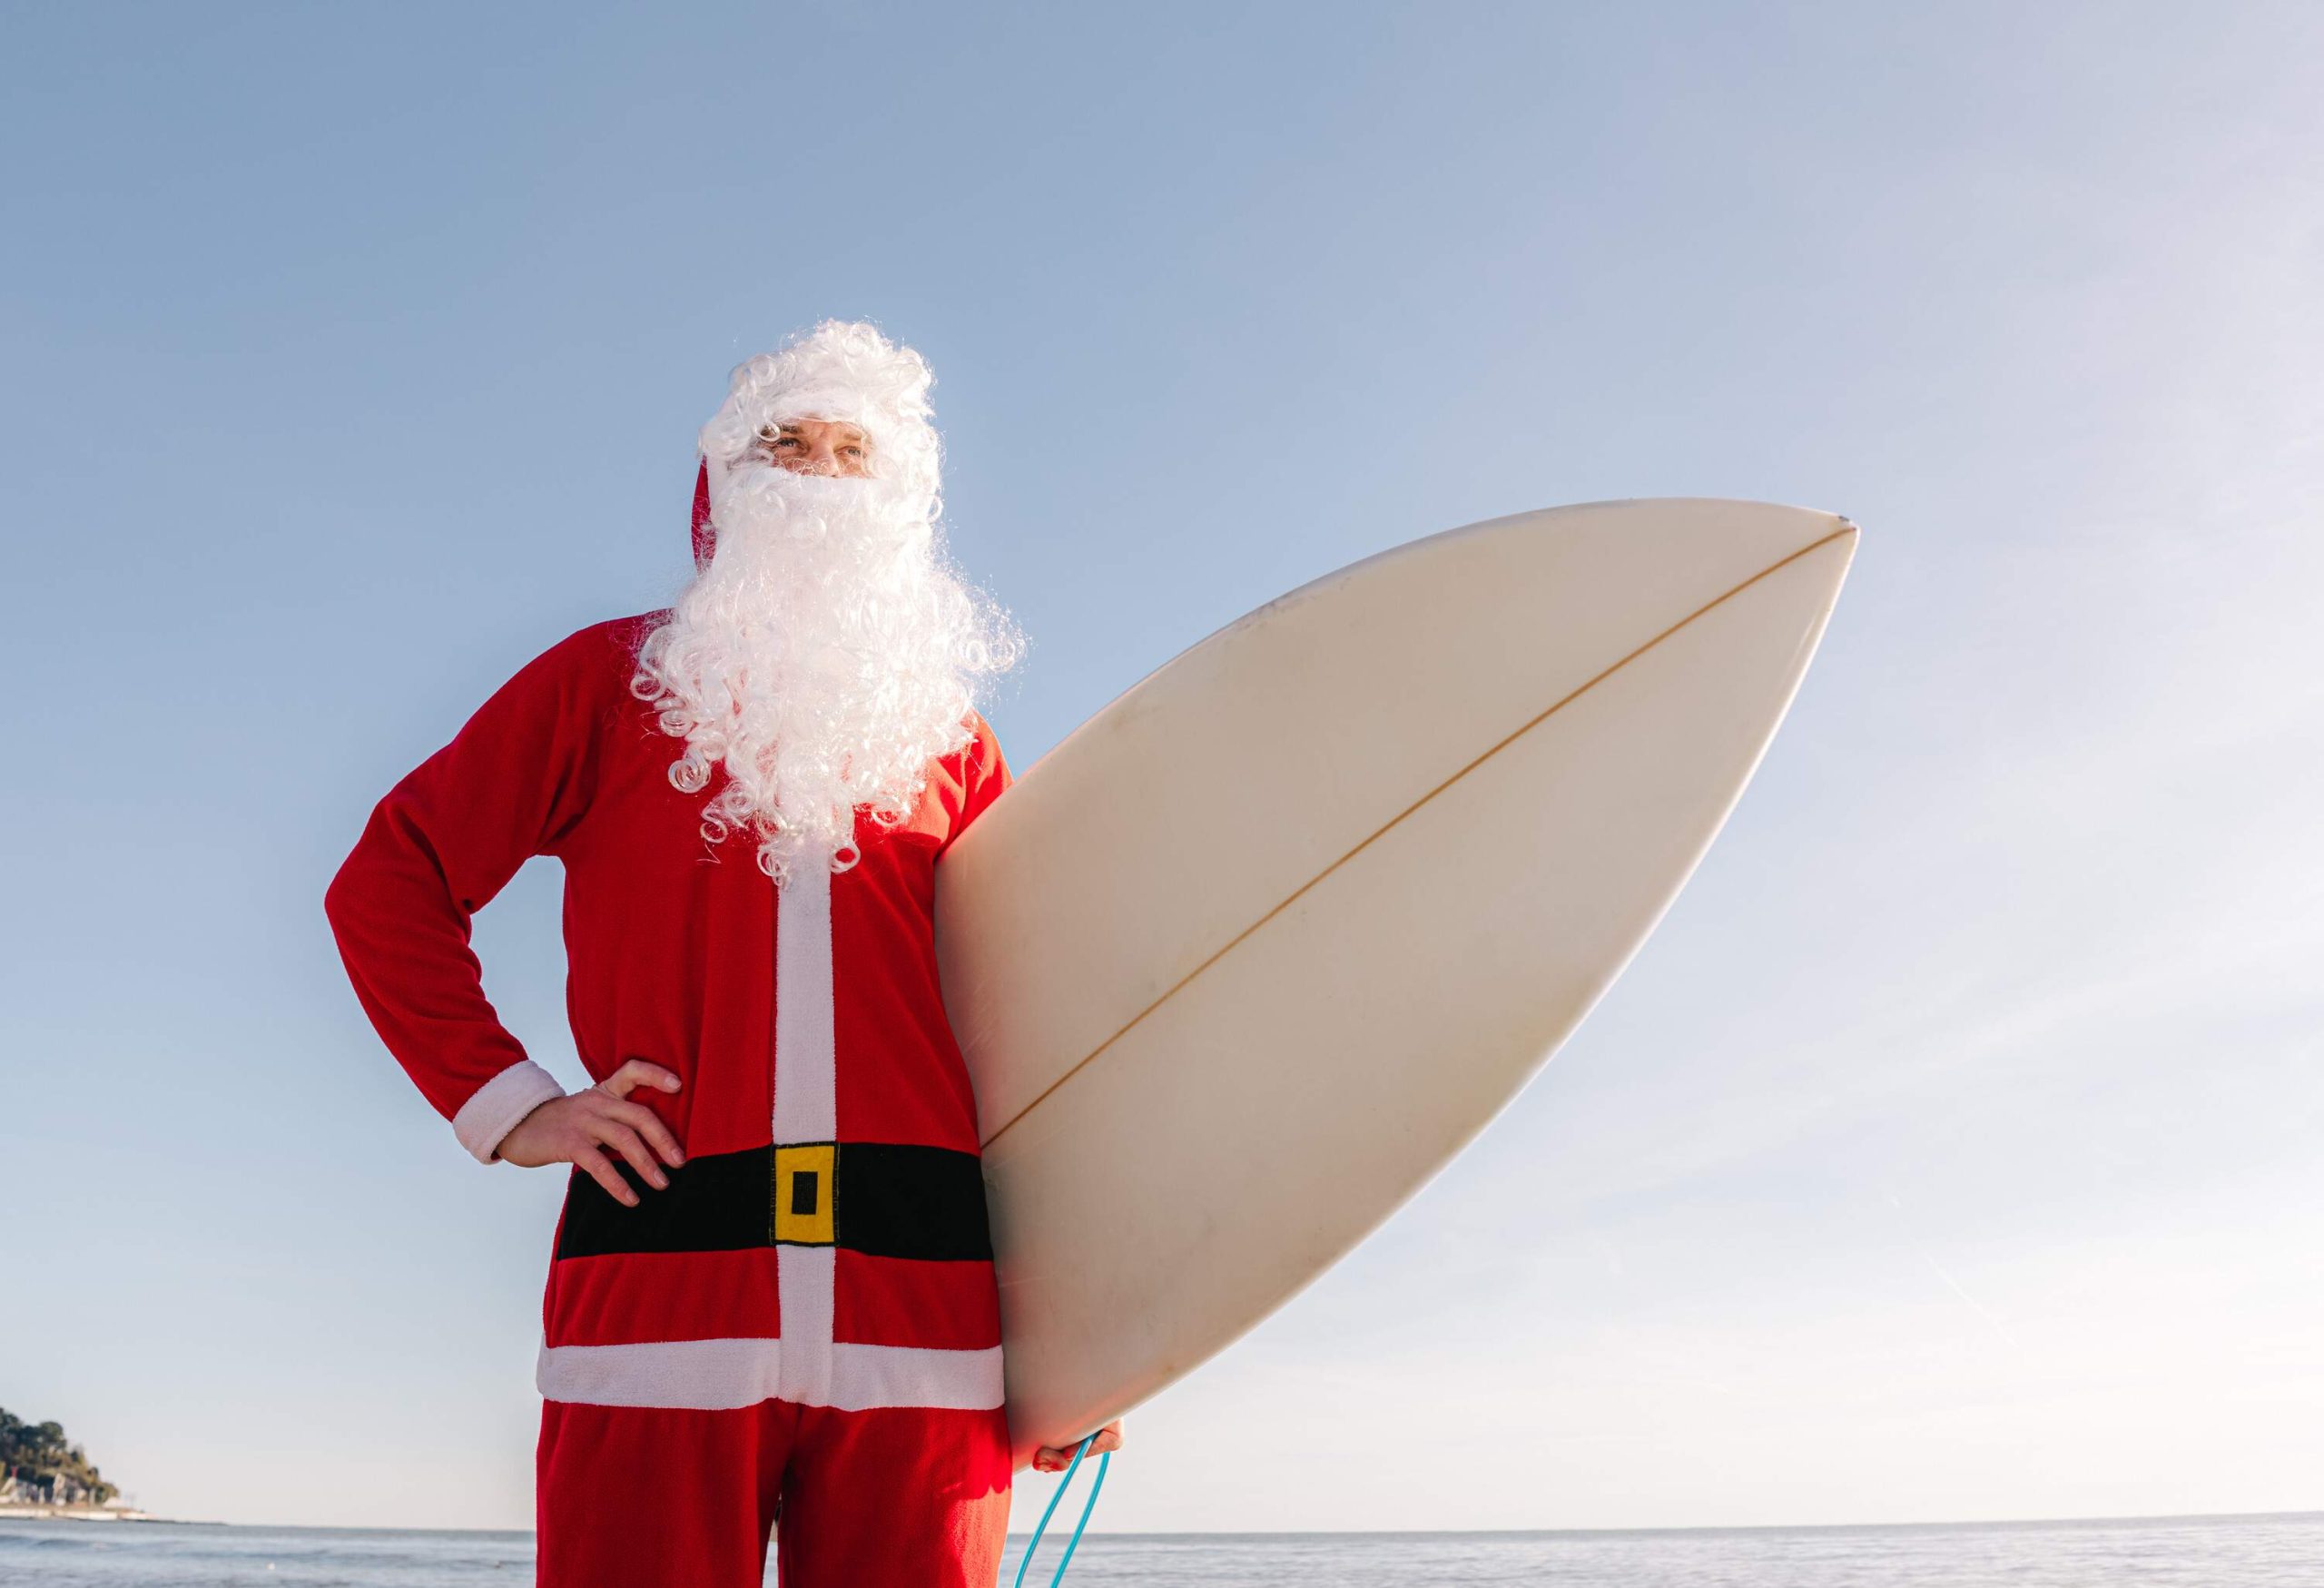 A man dressed as Santa Claus with a surfborad under his arm